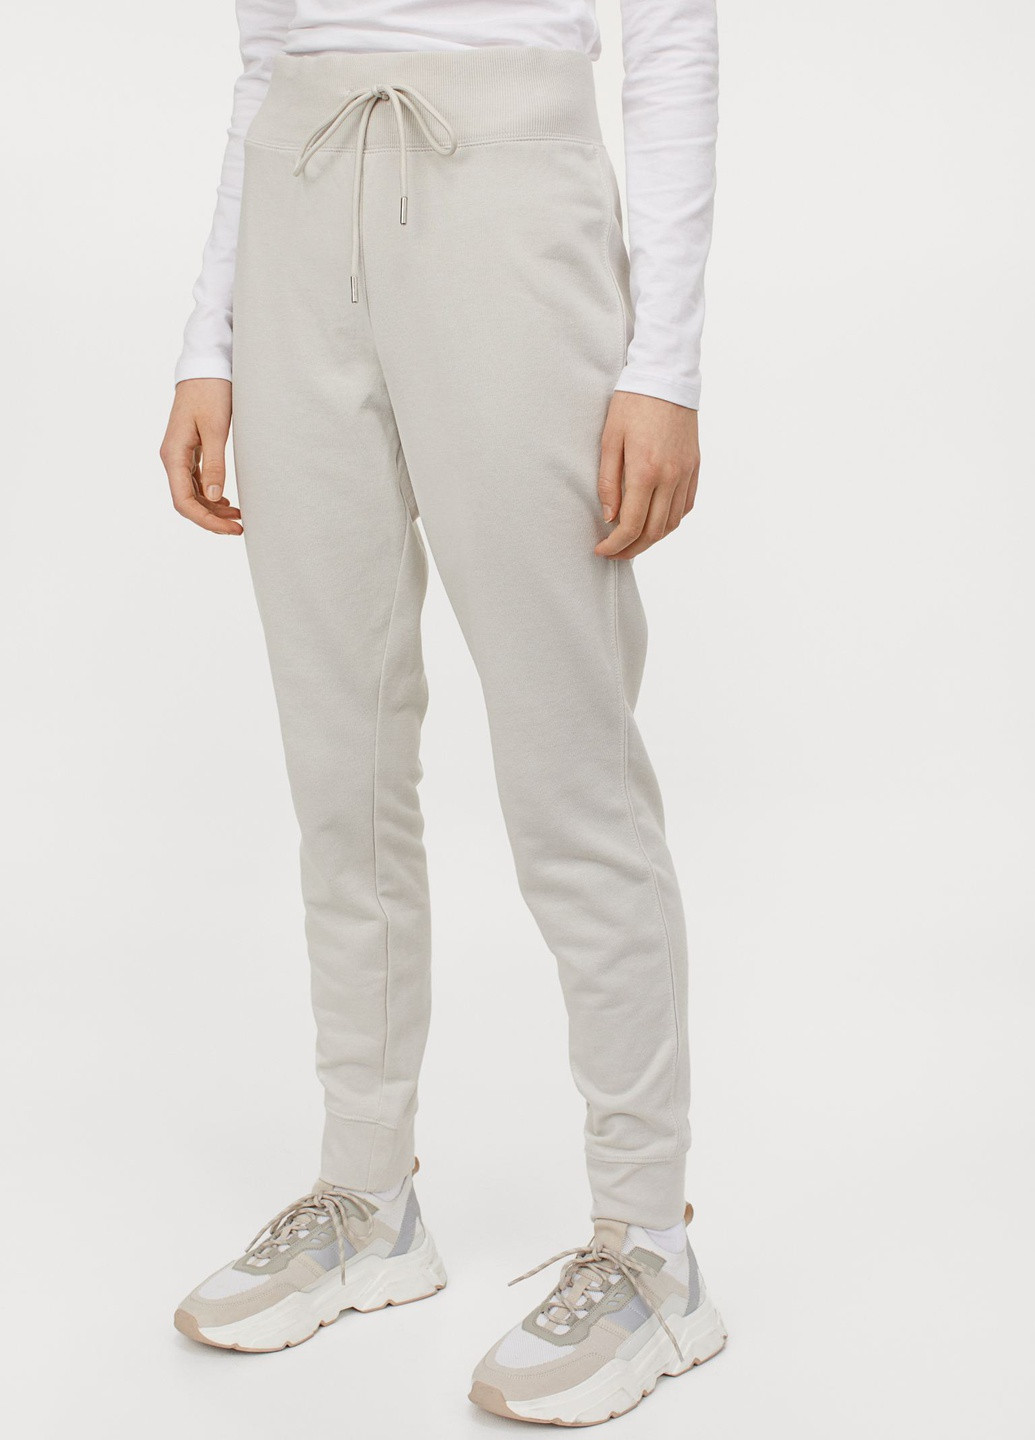 Піжамні штани H&M однотонні сірі